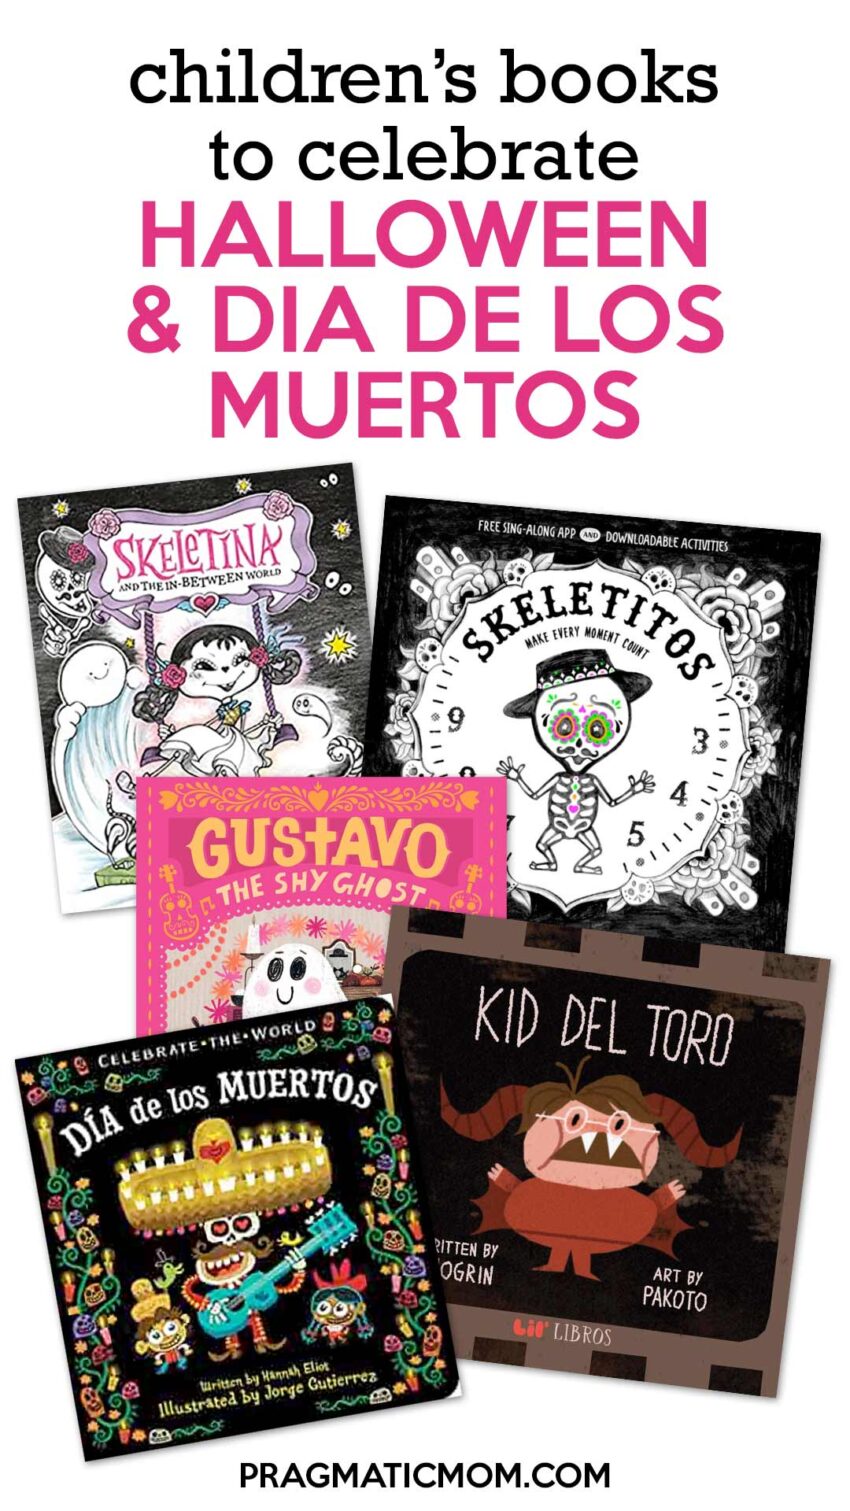 5 Children’s Books to Celebrate Halloween & Día de los Muertos